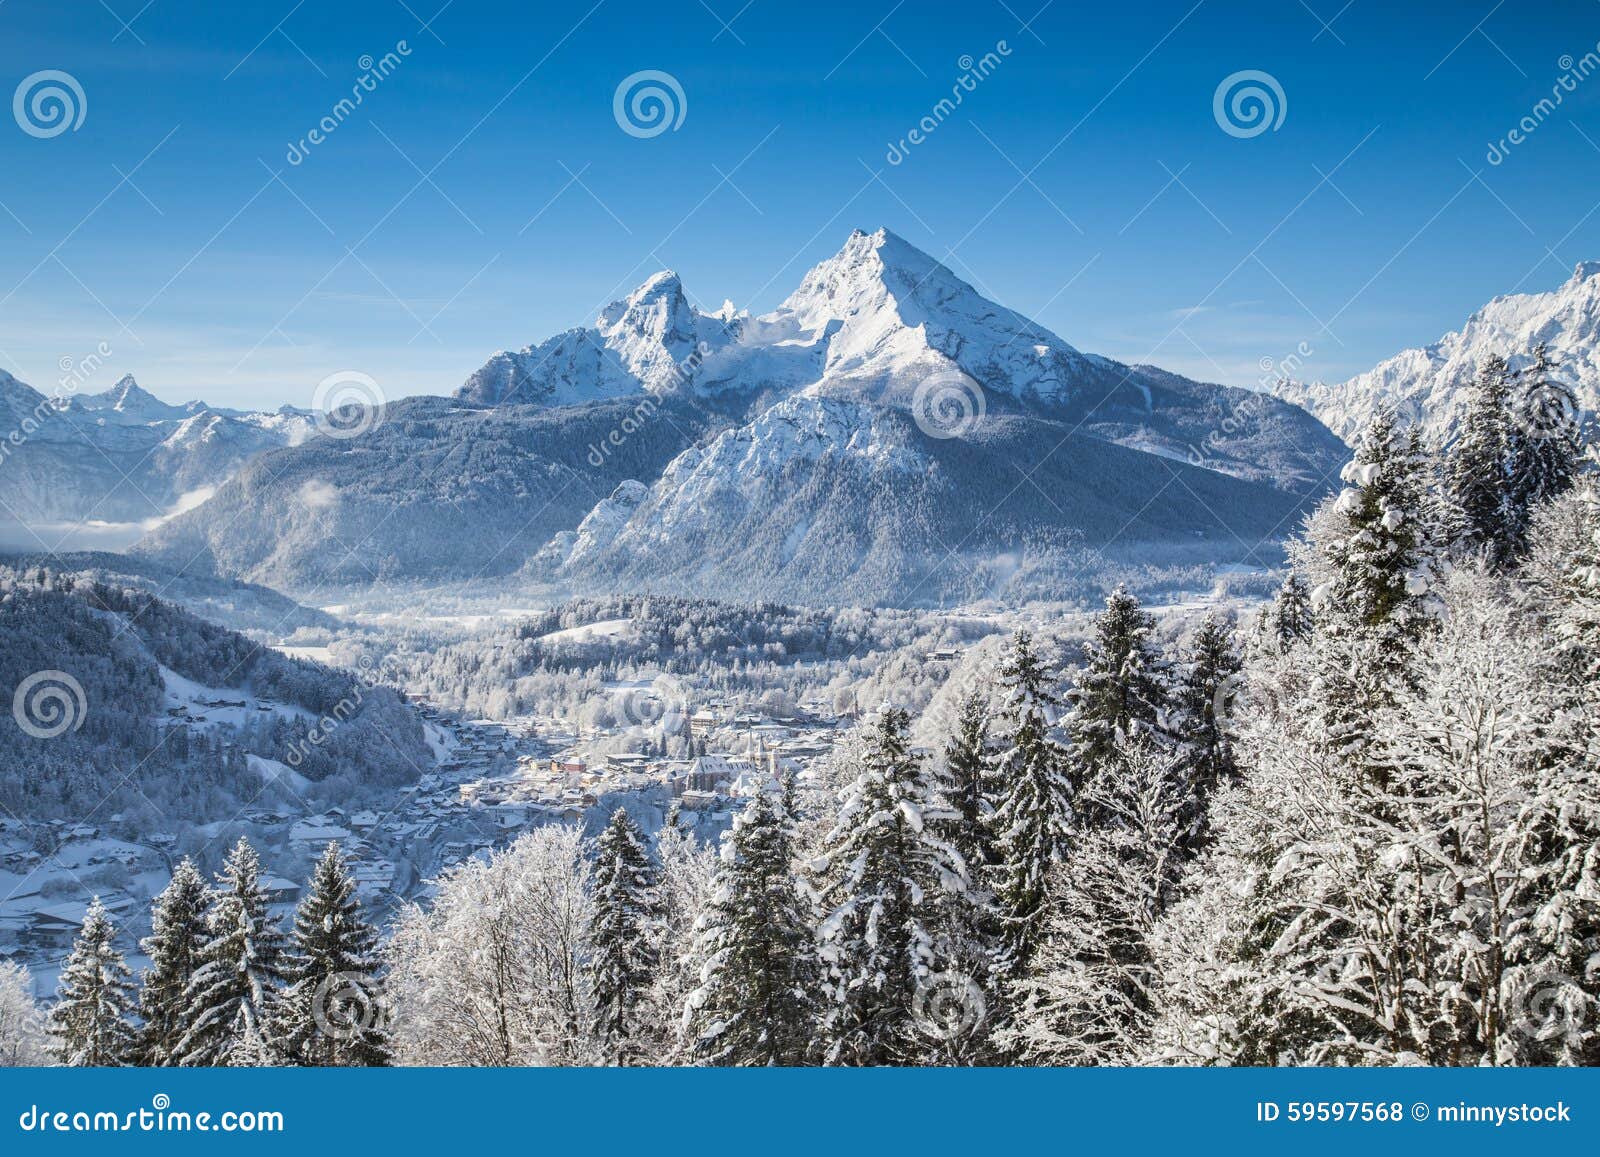 idyllic landscape in the bavarian alps, berchtesgaden, germany